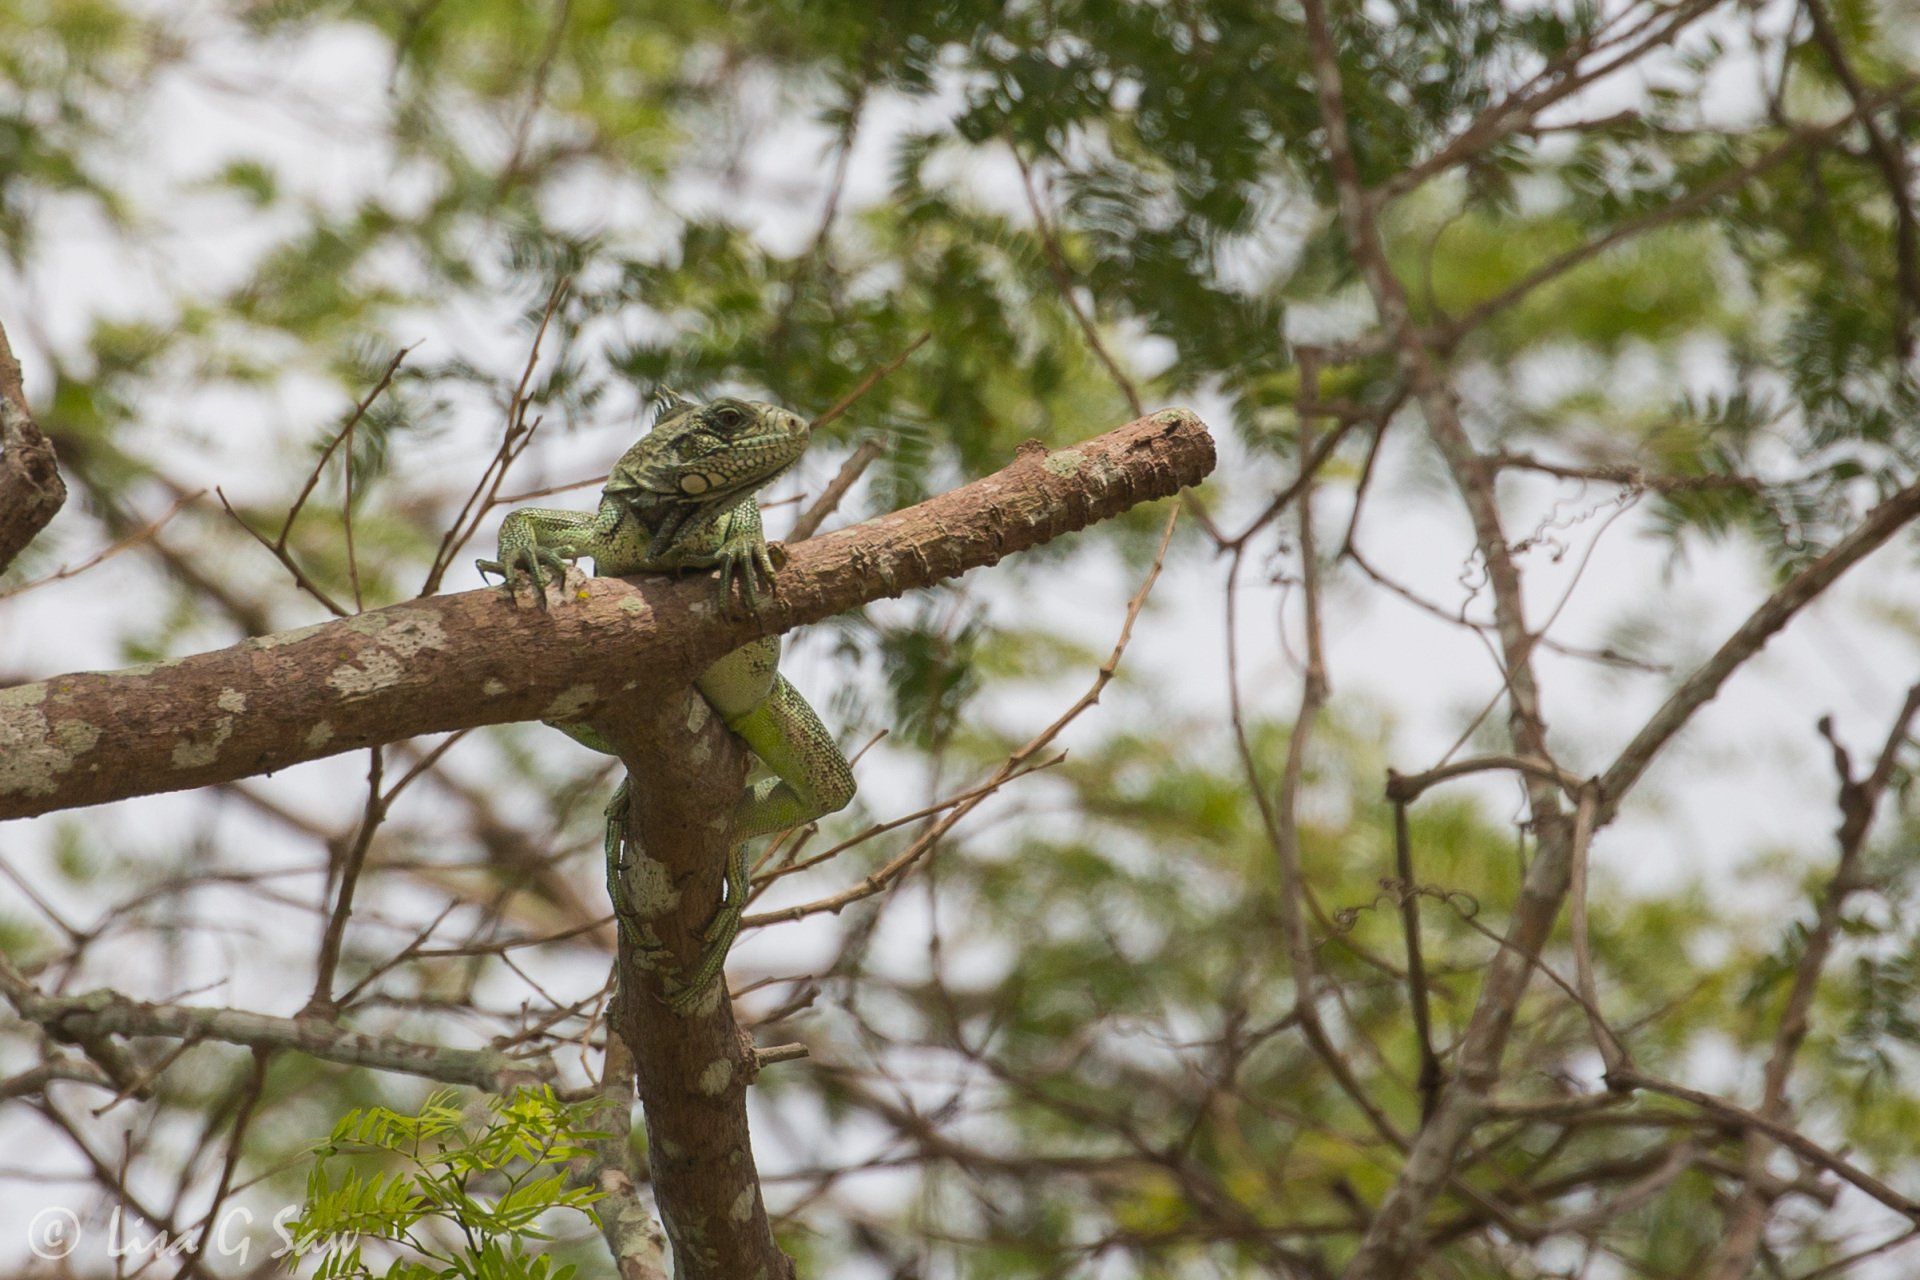 Green Iguana on a branch